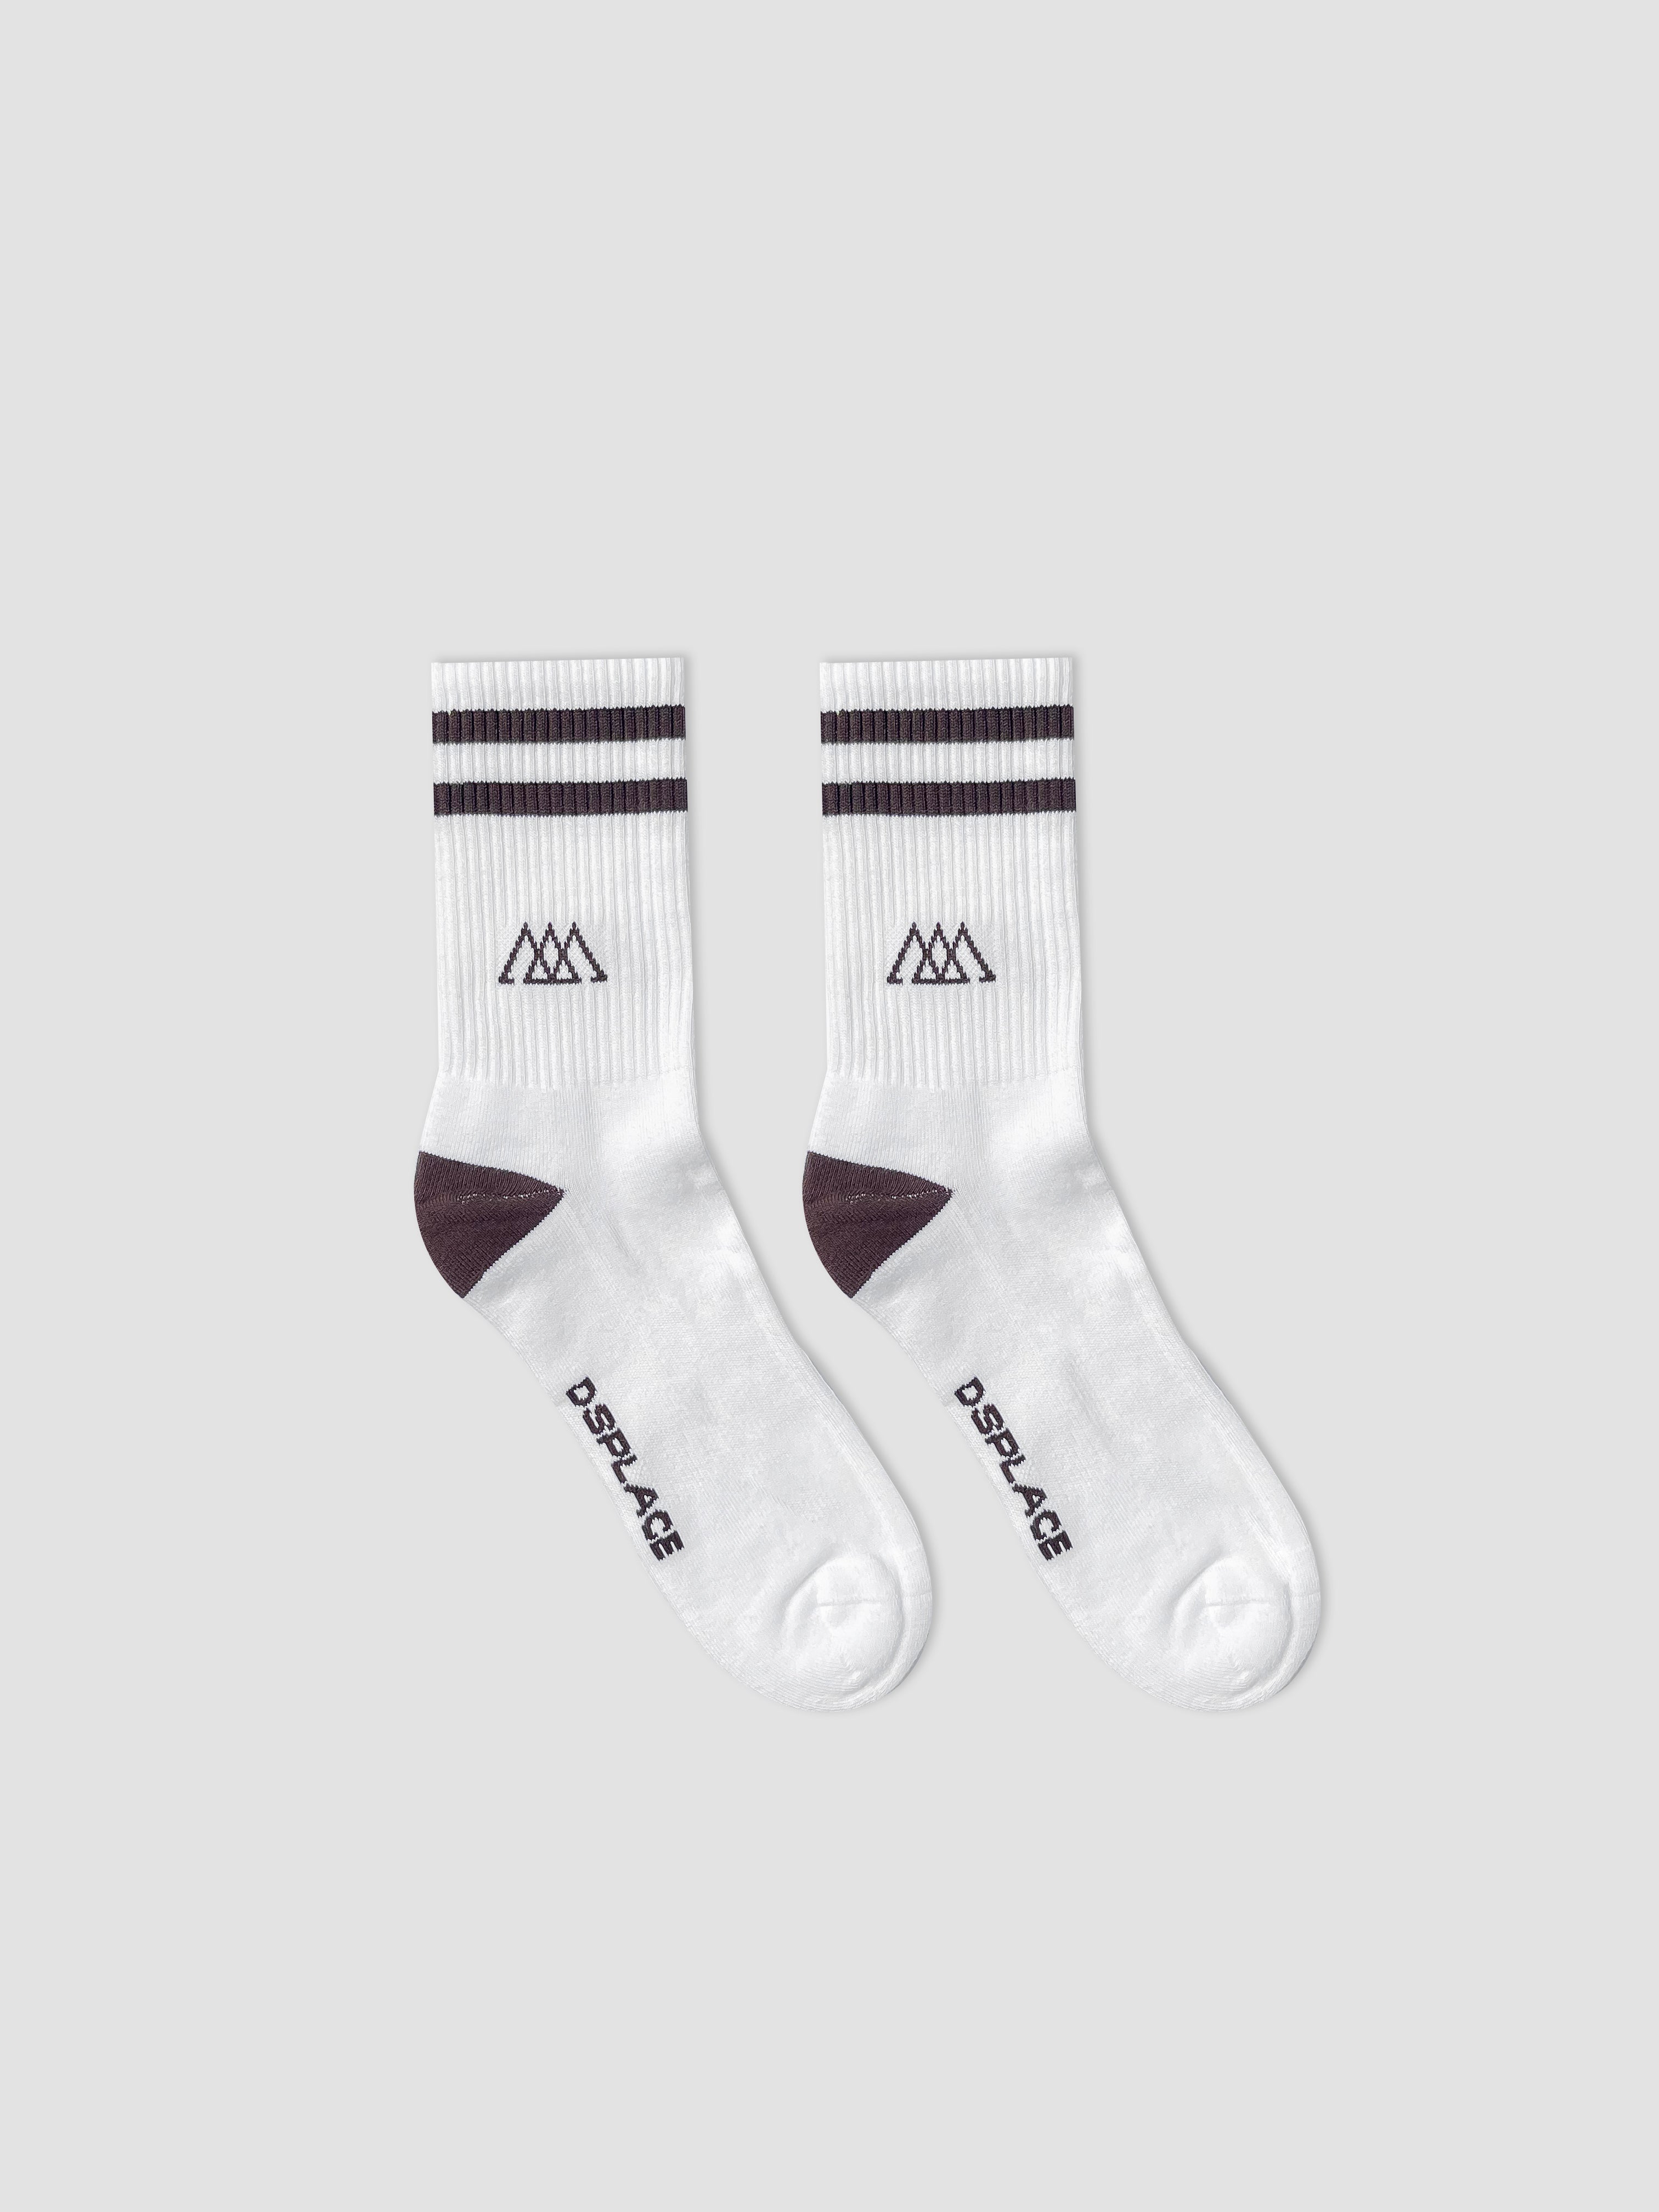 Racer Socks 2S - White / Chocolate Brown